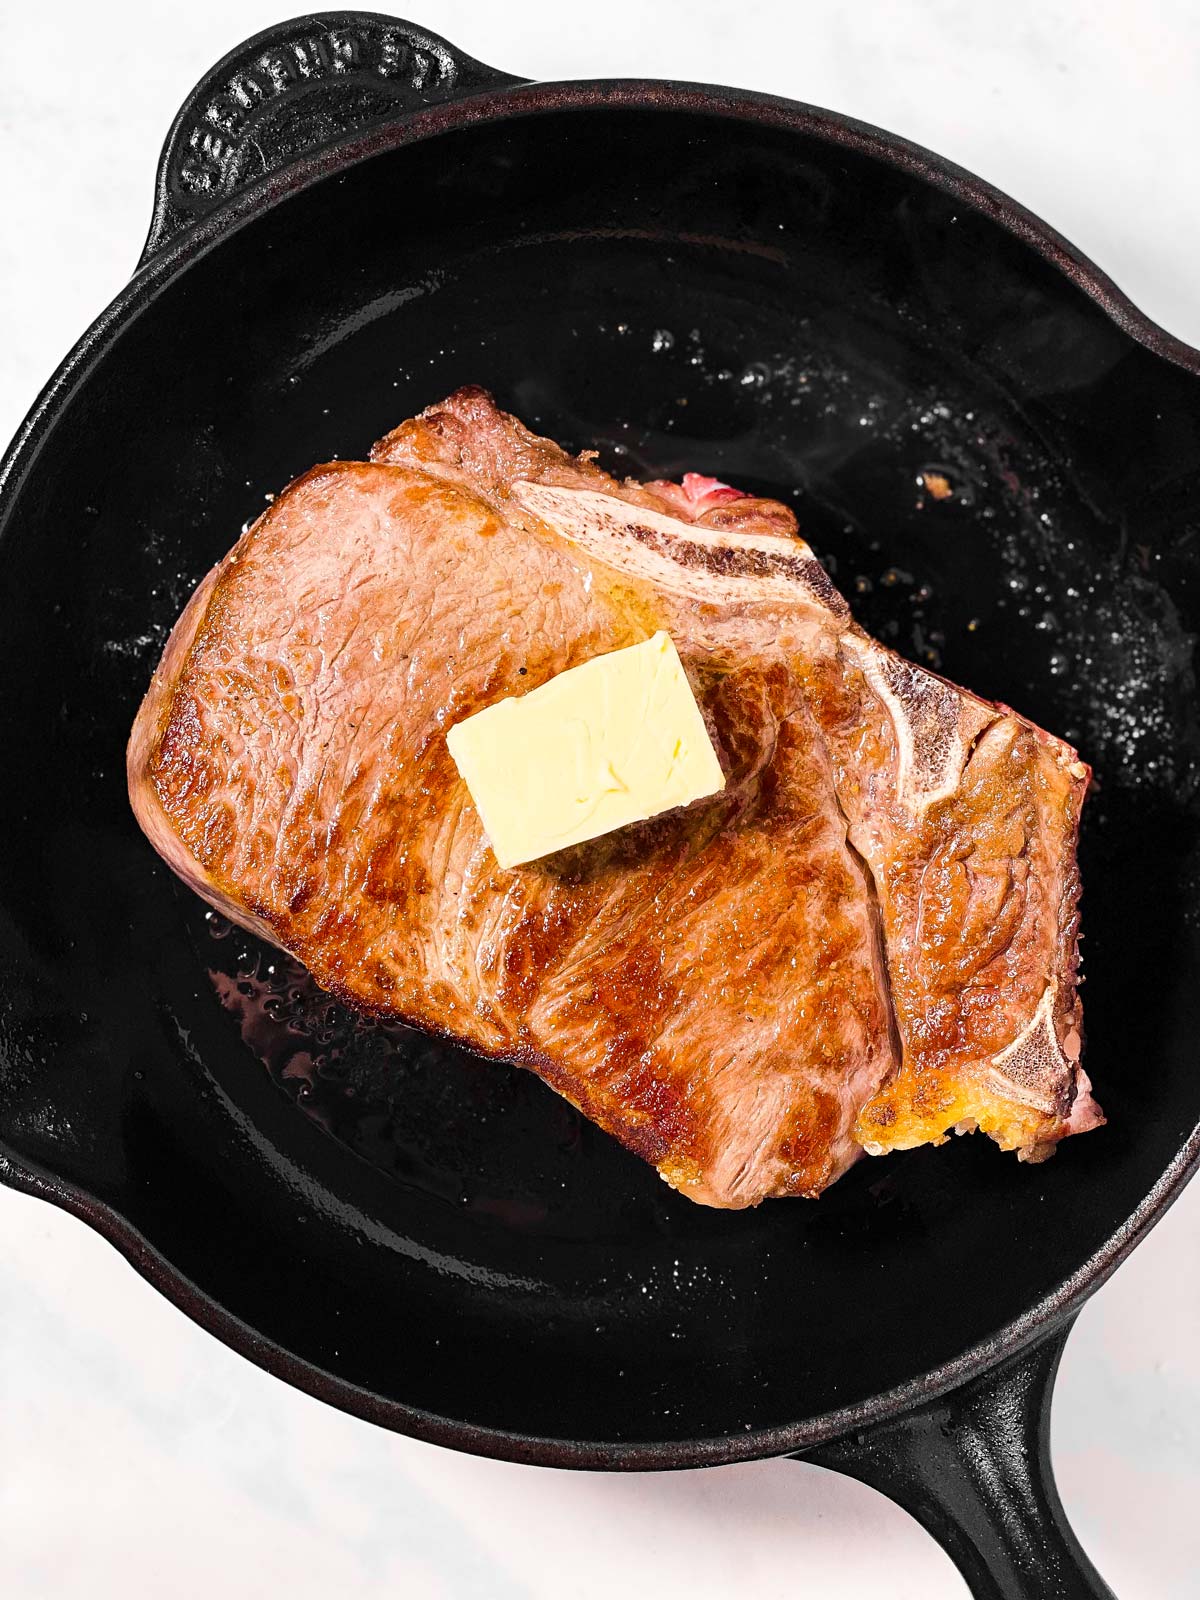 https://www.savorynothings.com/wp-content/uploads/2022/01/oven-baked-steak-recipe-image-step-3.jpg